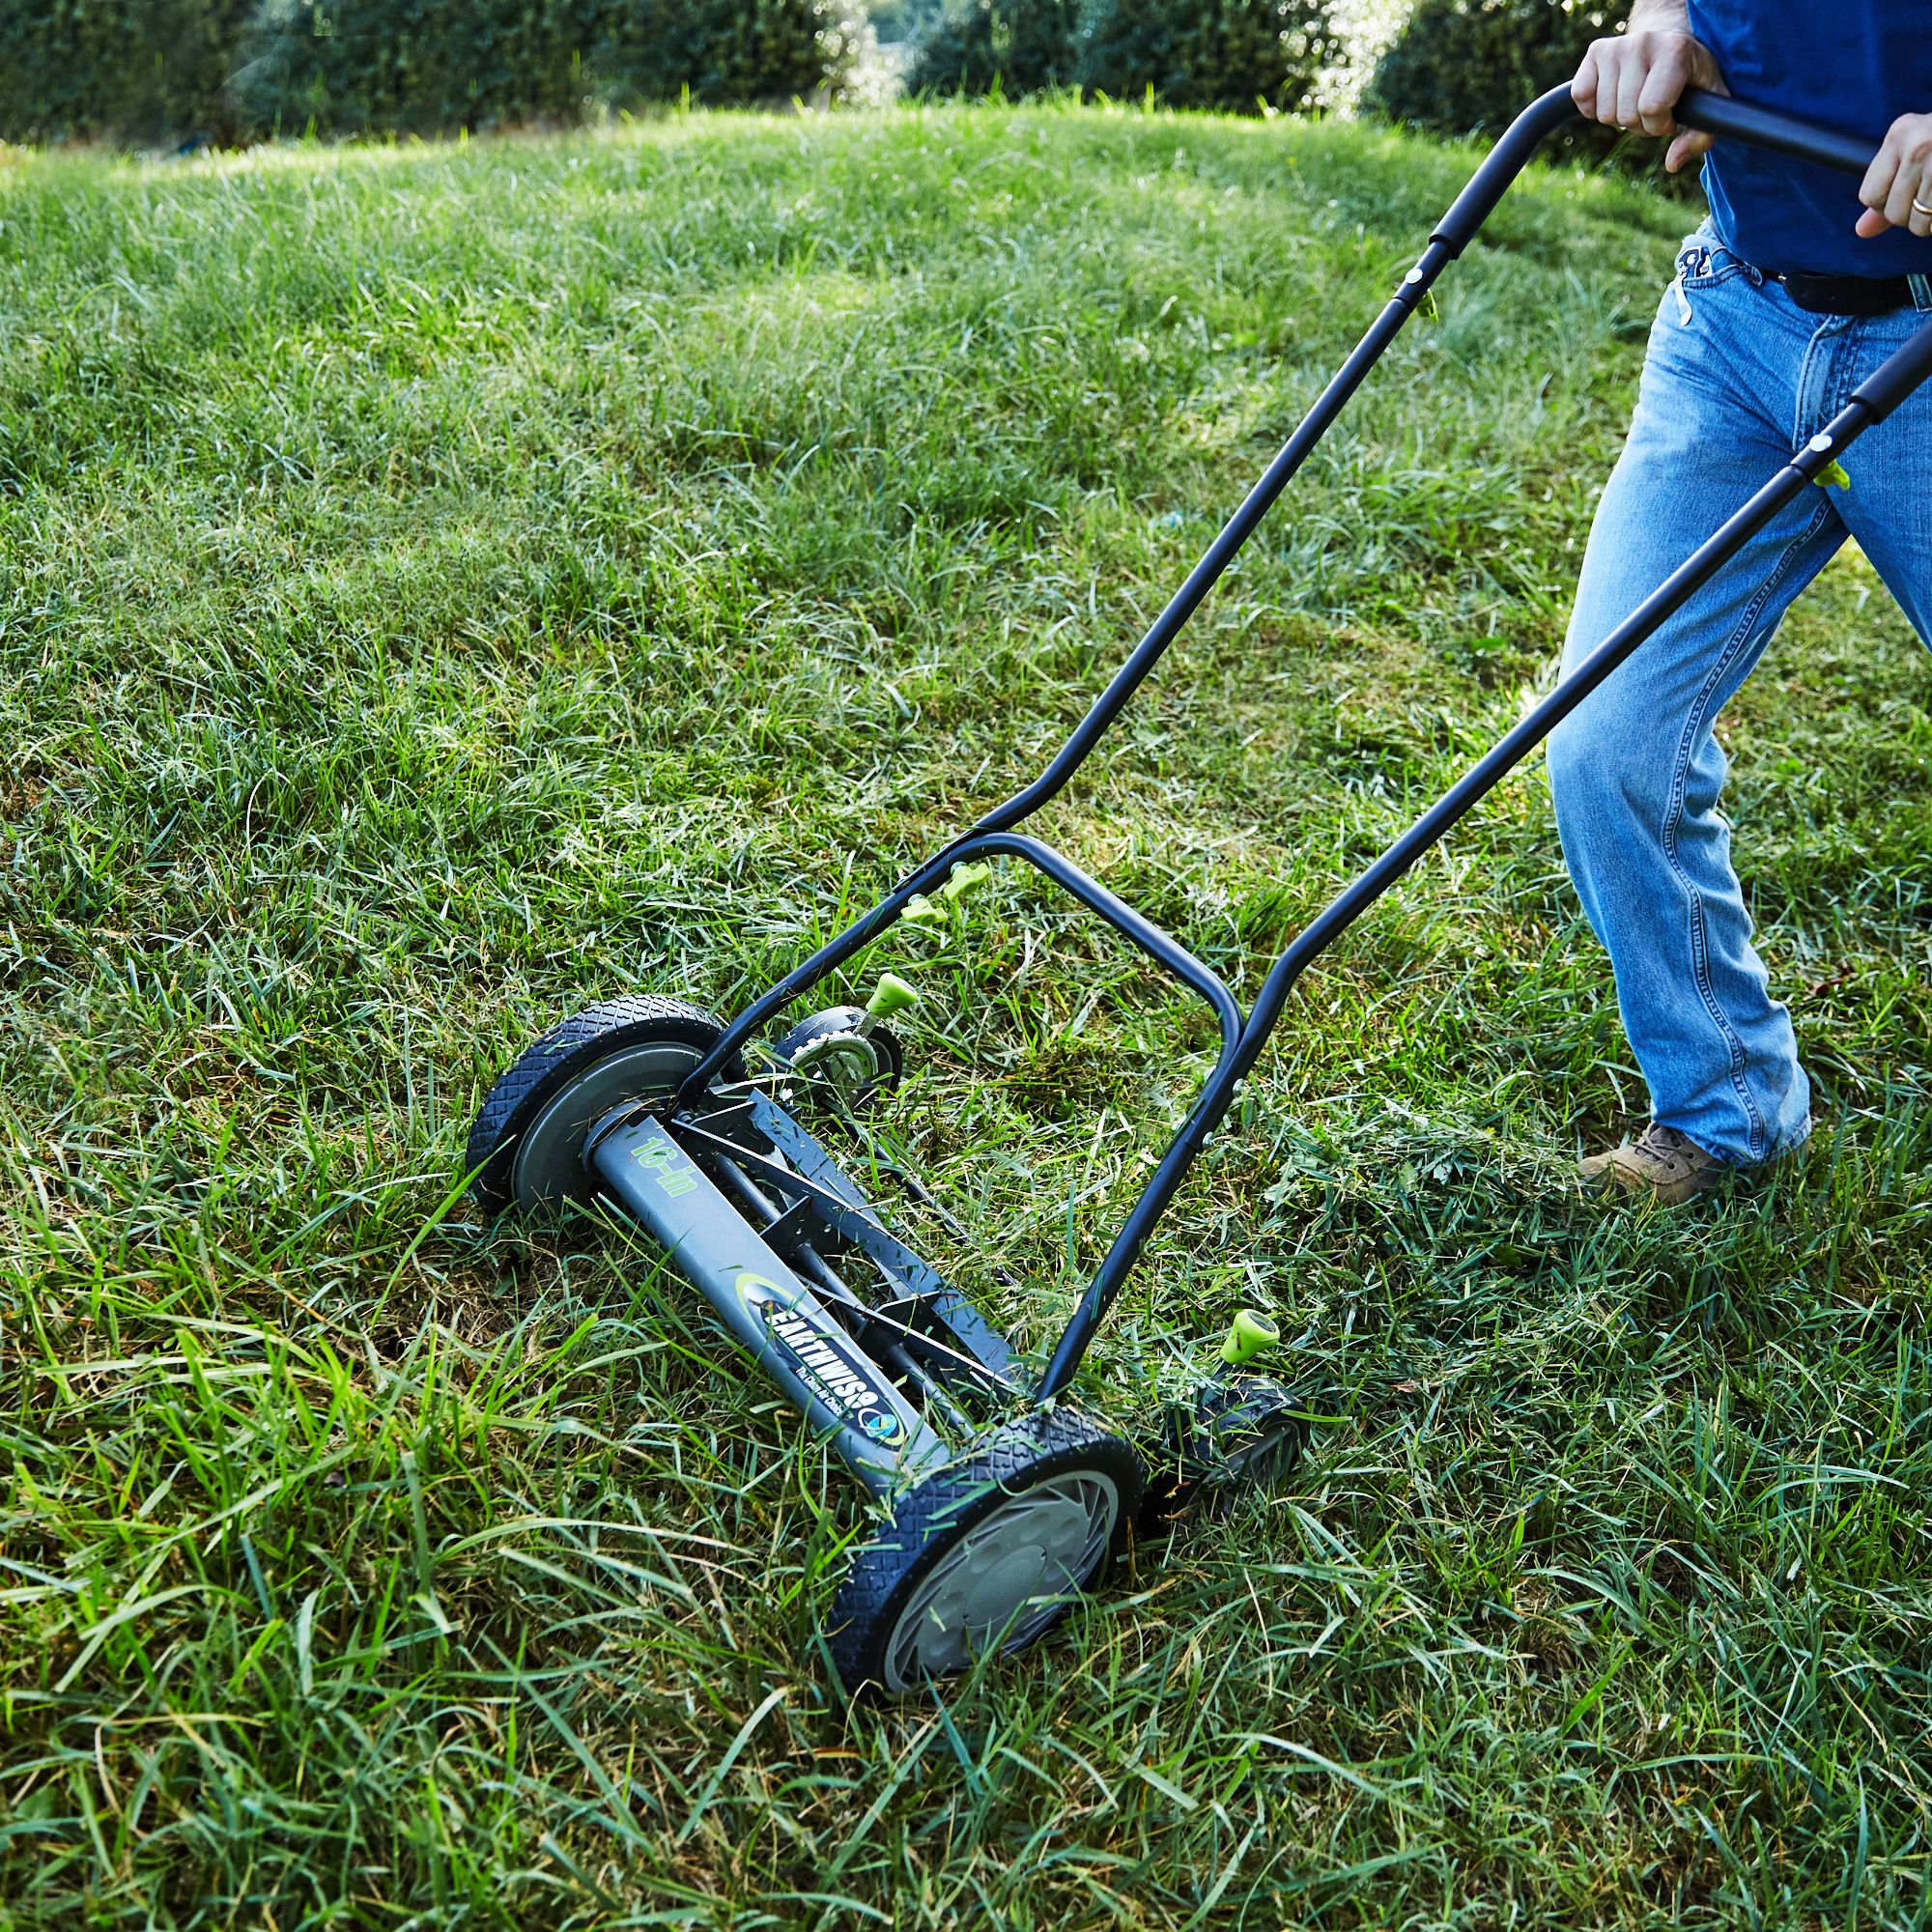  20in Lawn Mower Manual Push Reel Mower Outdoor Lawn Walk Push  Mower Cutting Grass Catcher 5 Blades for Villas,Parks,Gardens : Patio, Lawn  & Garden